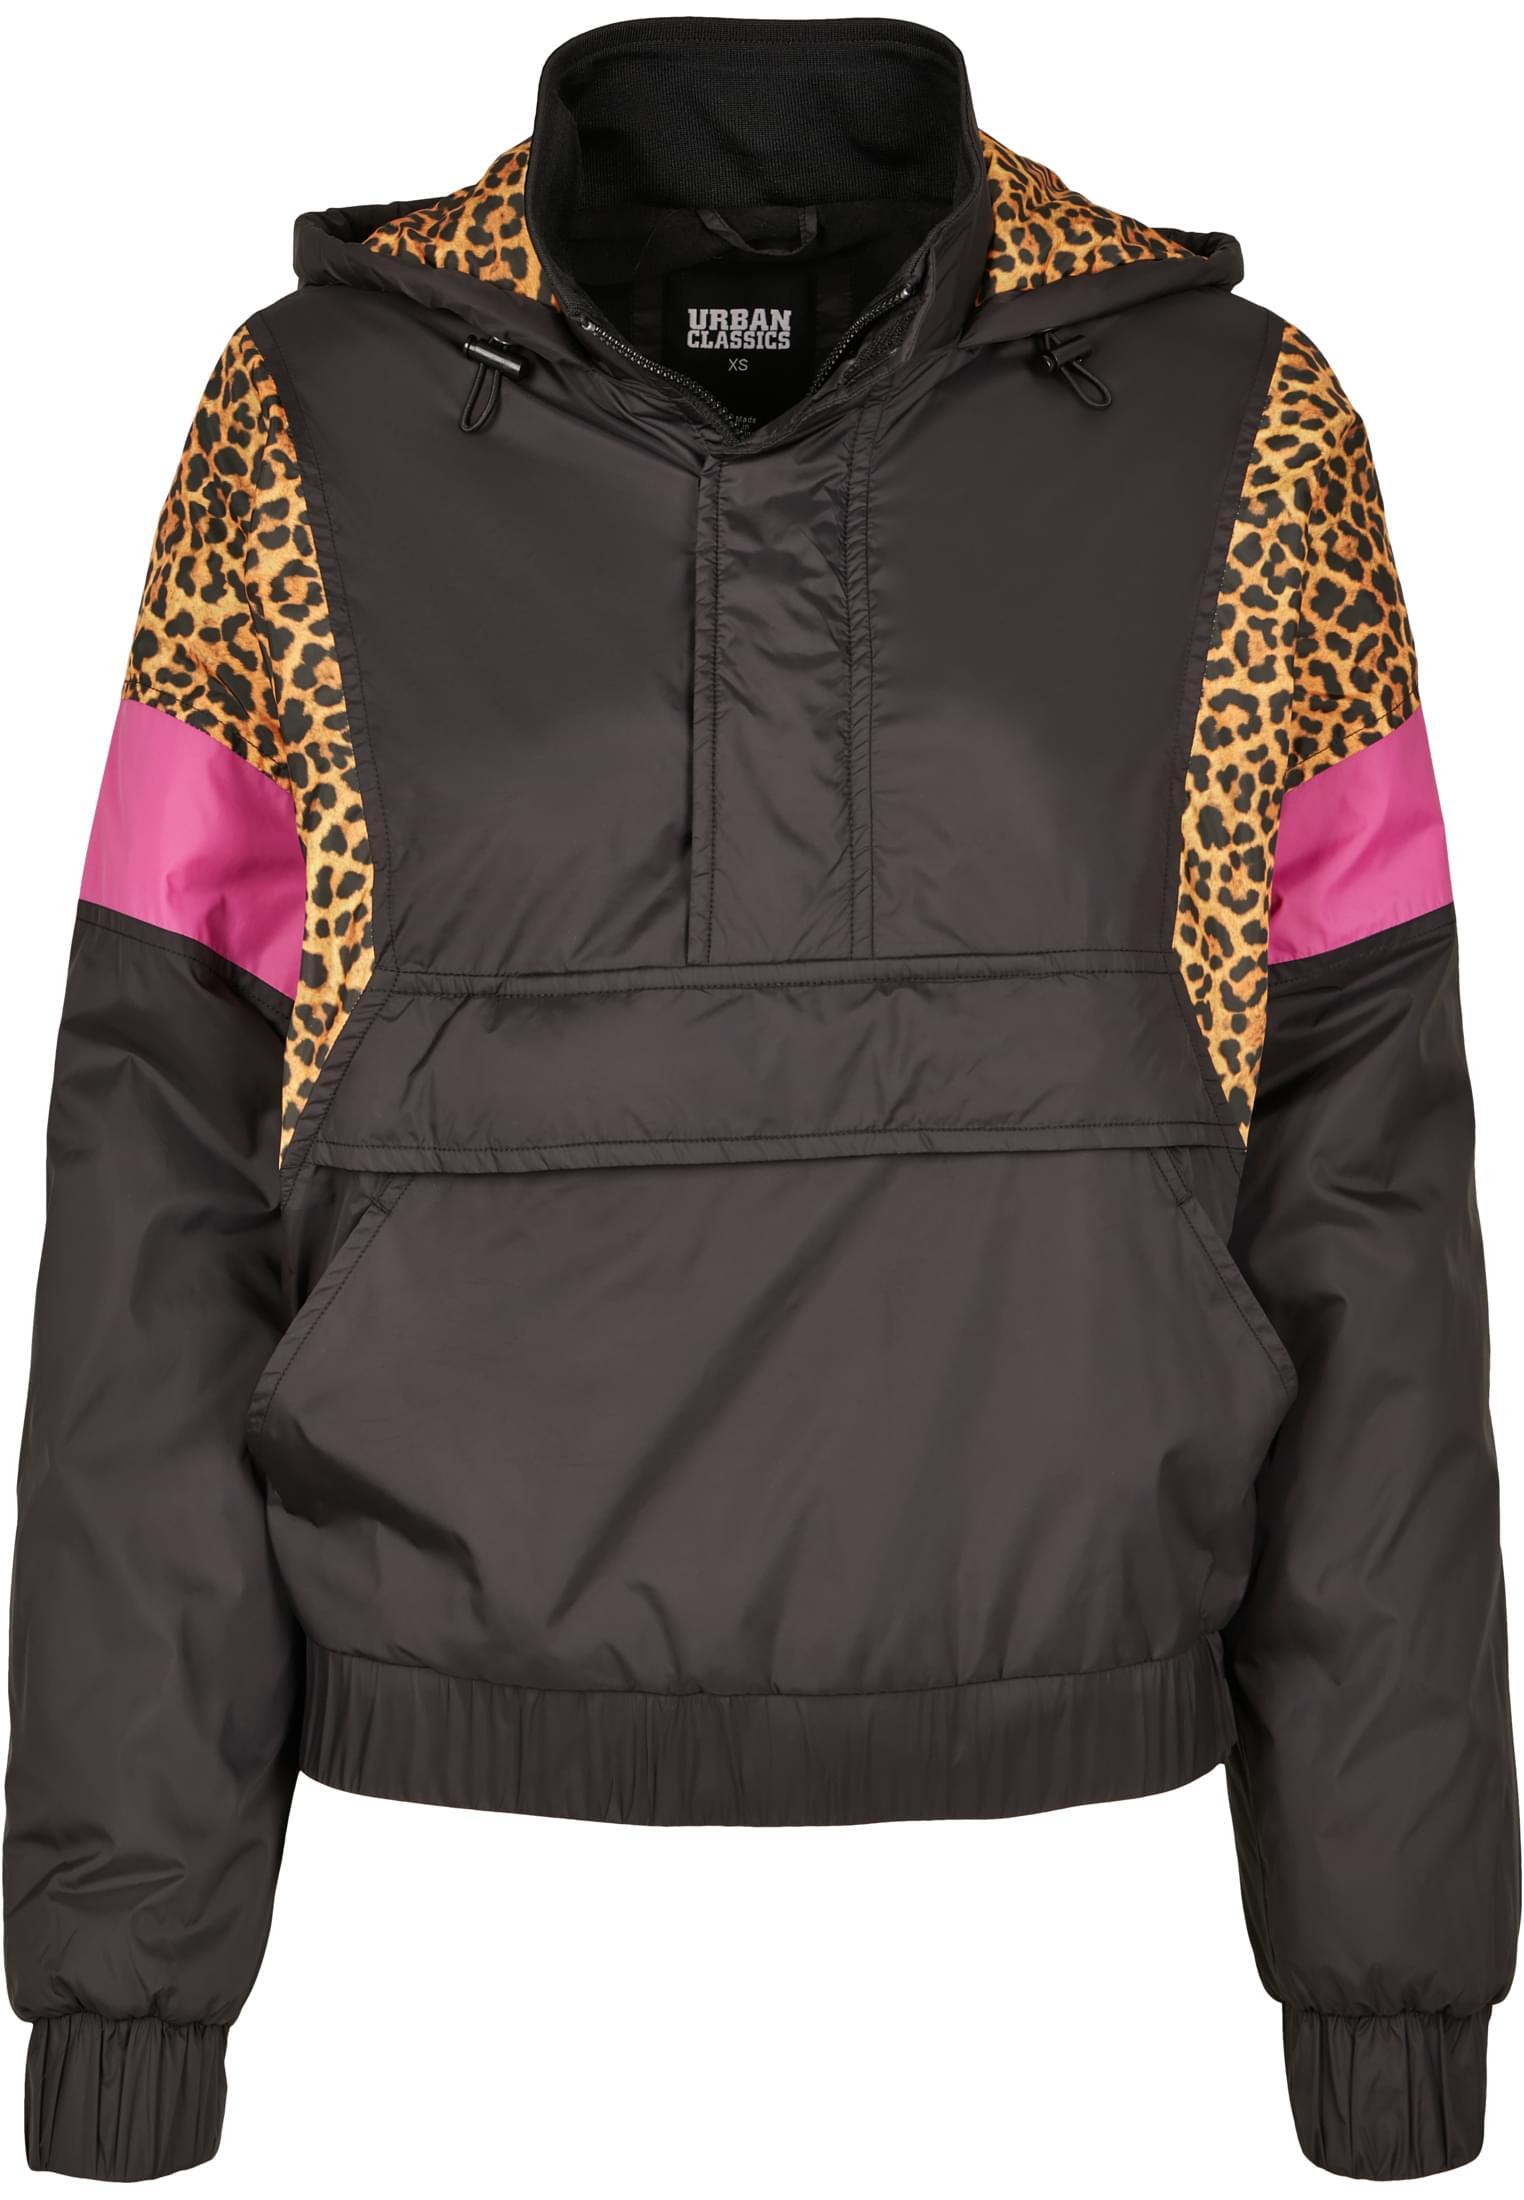 Urban Classics AOP Retro Puffer Jacket darkblue damast aop -   - Online Hip Hop Fashion Store